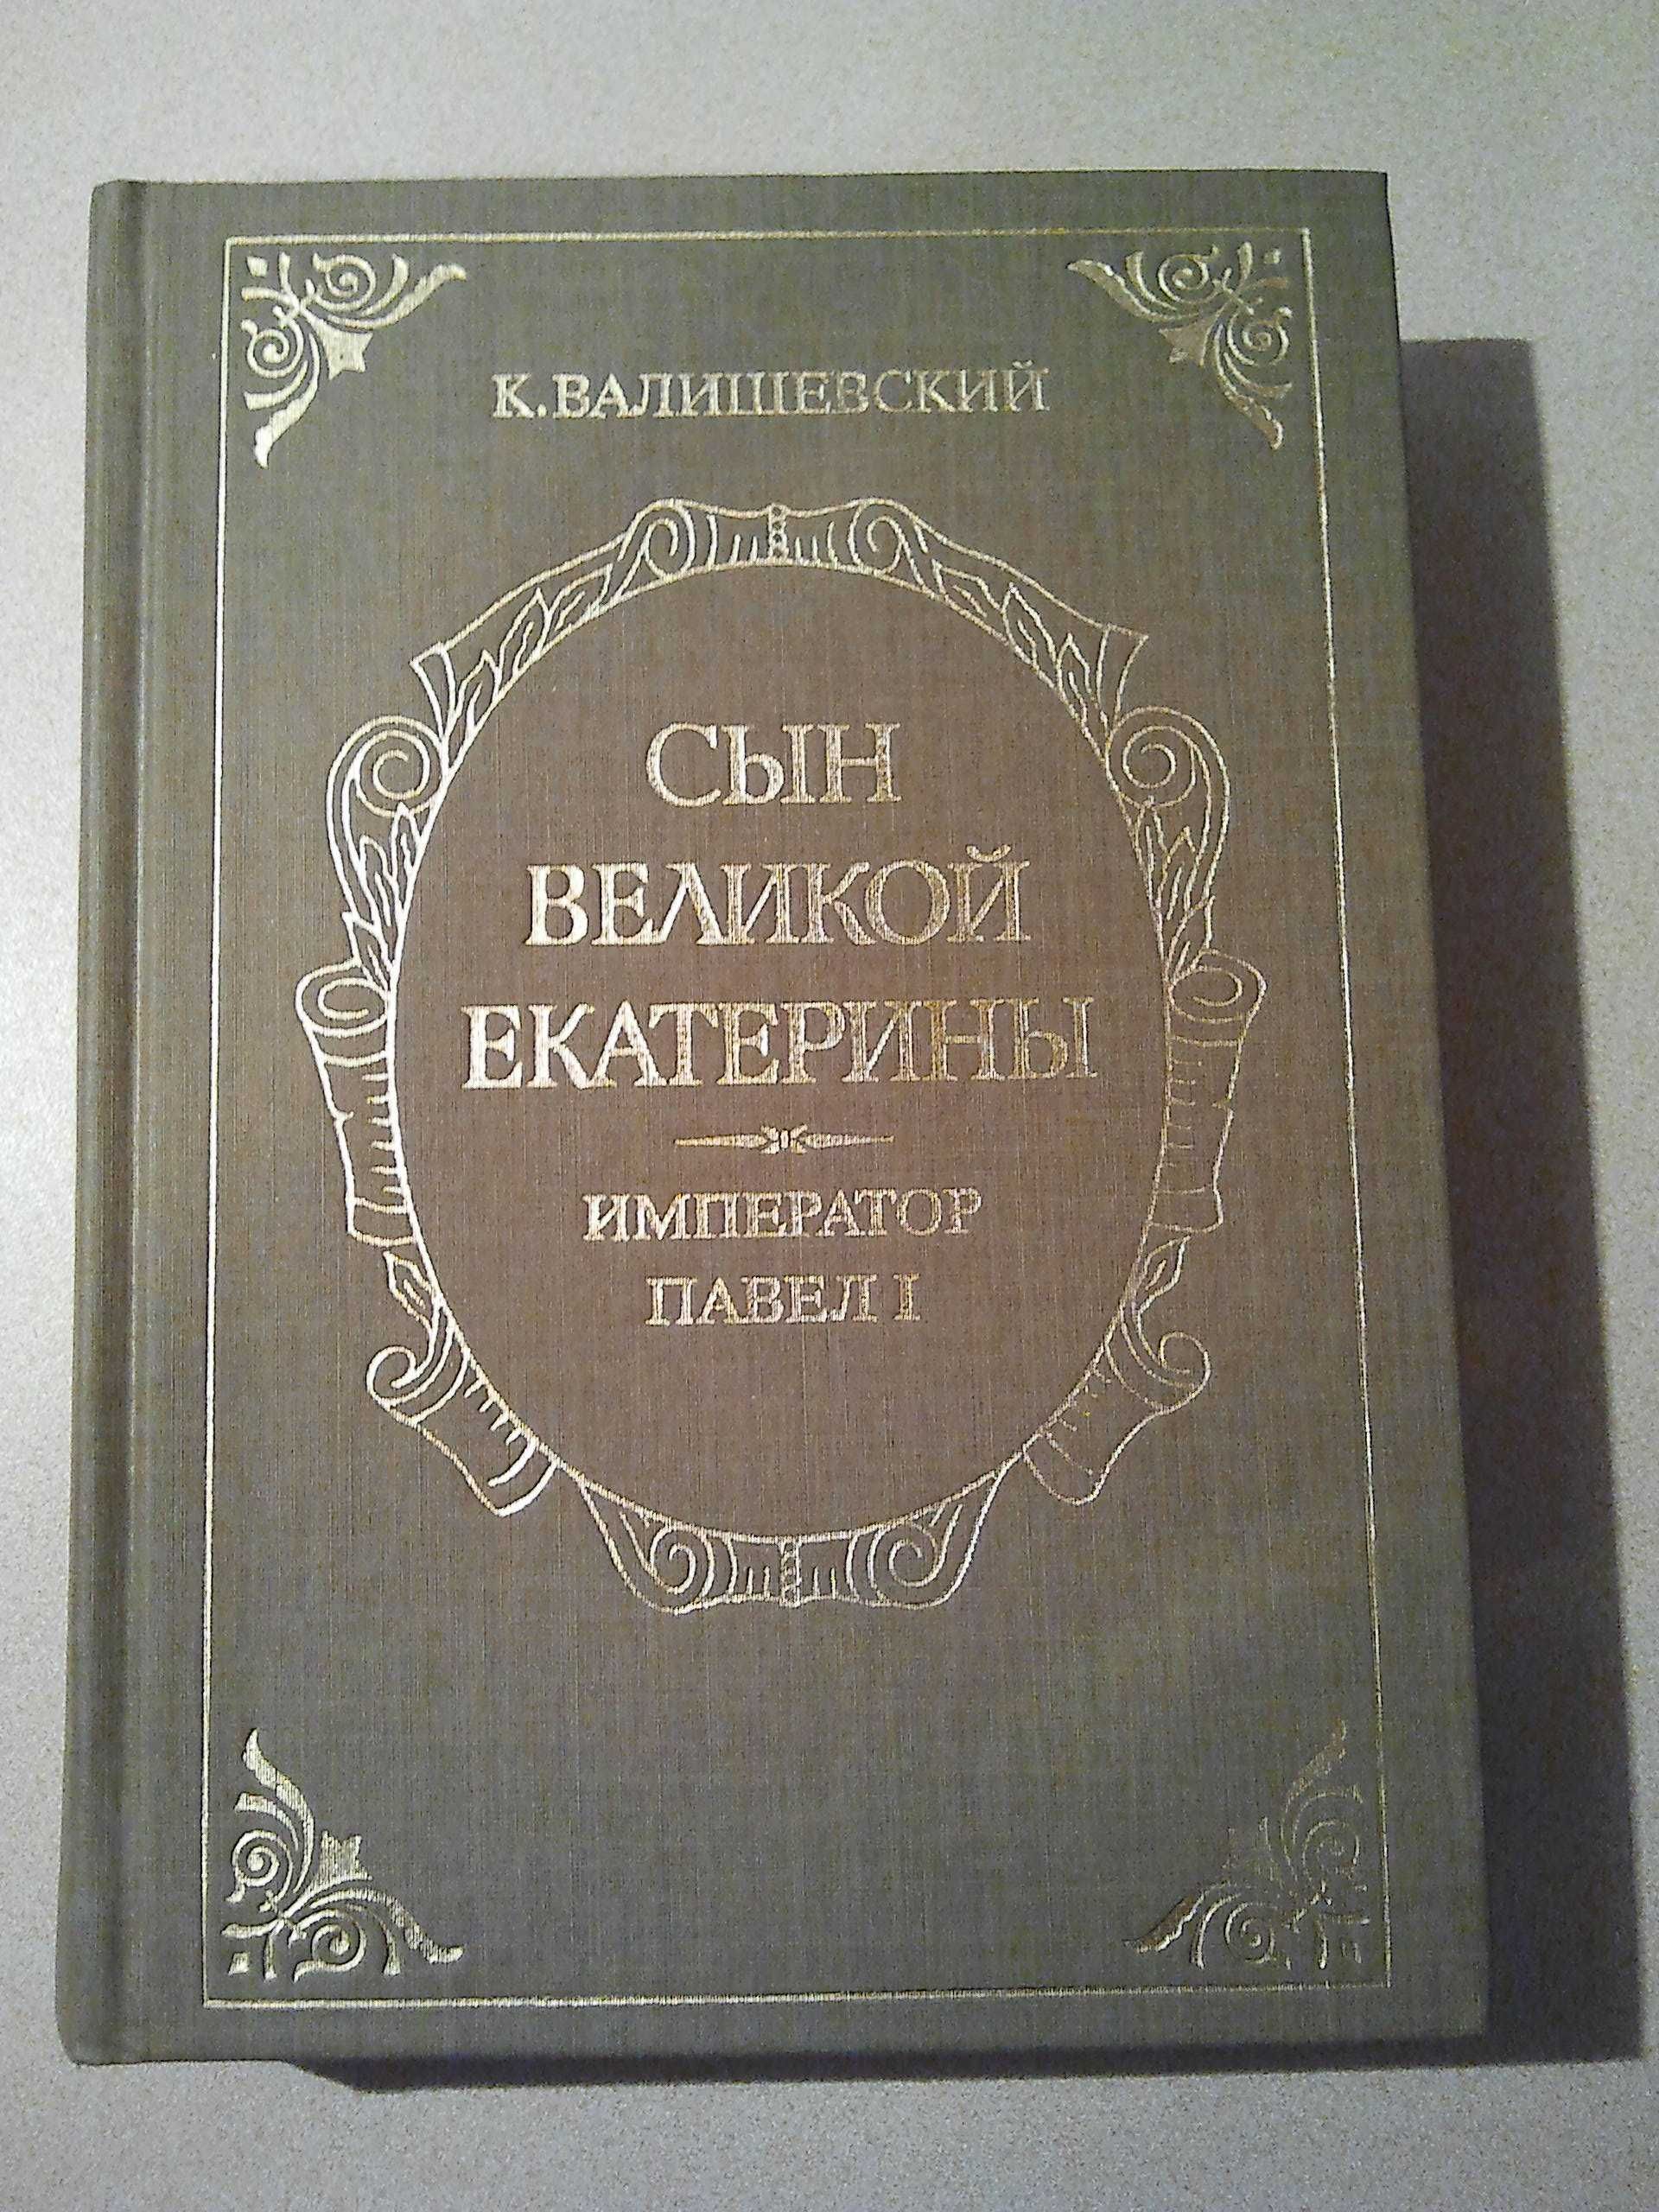 "Тайна Распутина". Н.Н. Евреинов.. 1924 год. Репринтное издание.